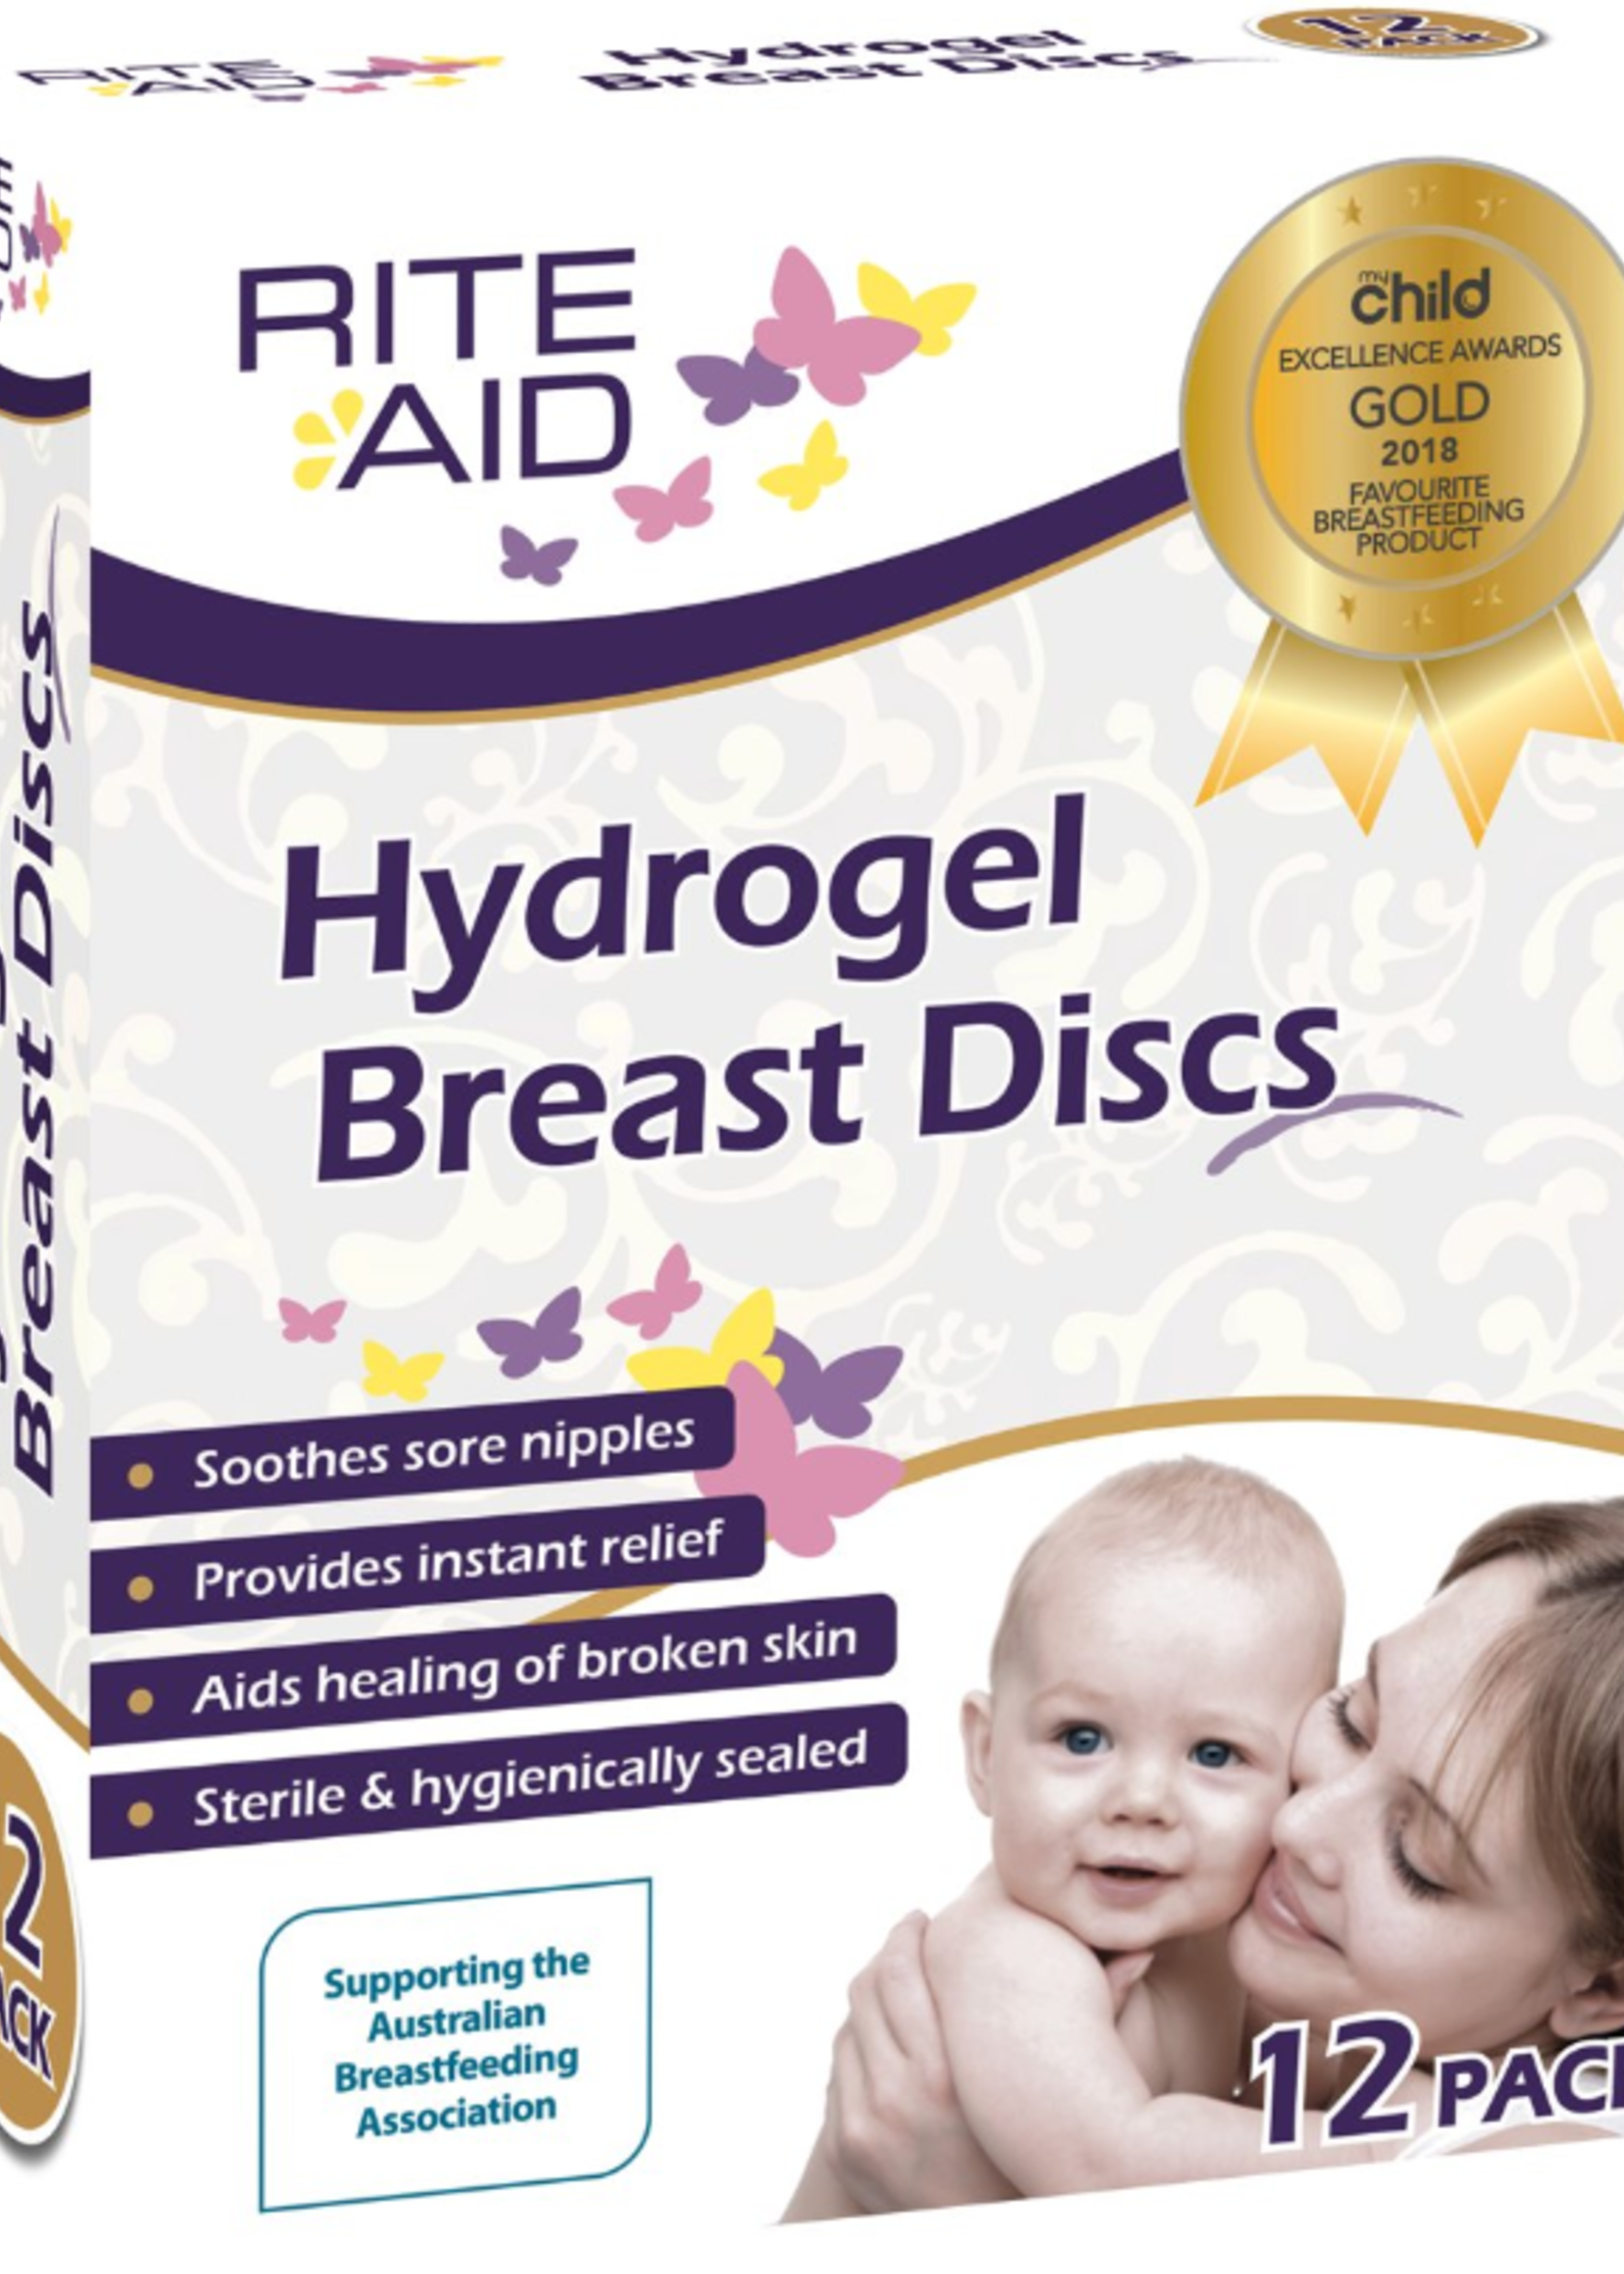 https://cdn.webshopapp.com/shops/23448/files/313811348/1652x2313x1/rite-aid-rite-aid-hydrogel-pads-breast-discs-per-s.jpg